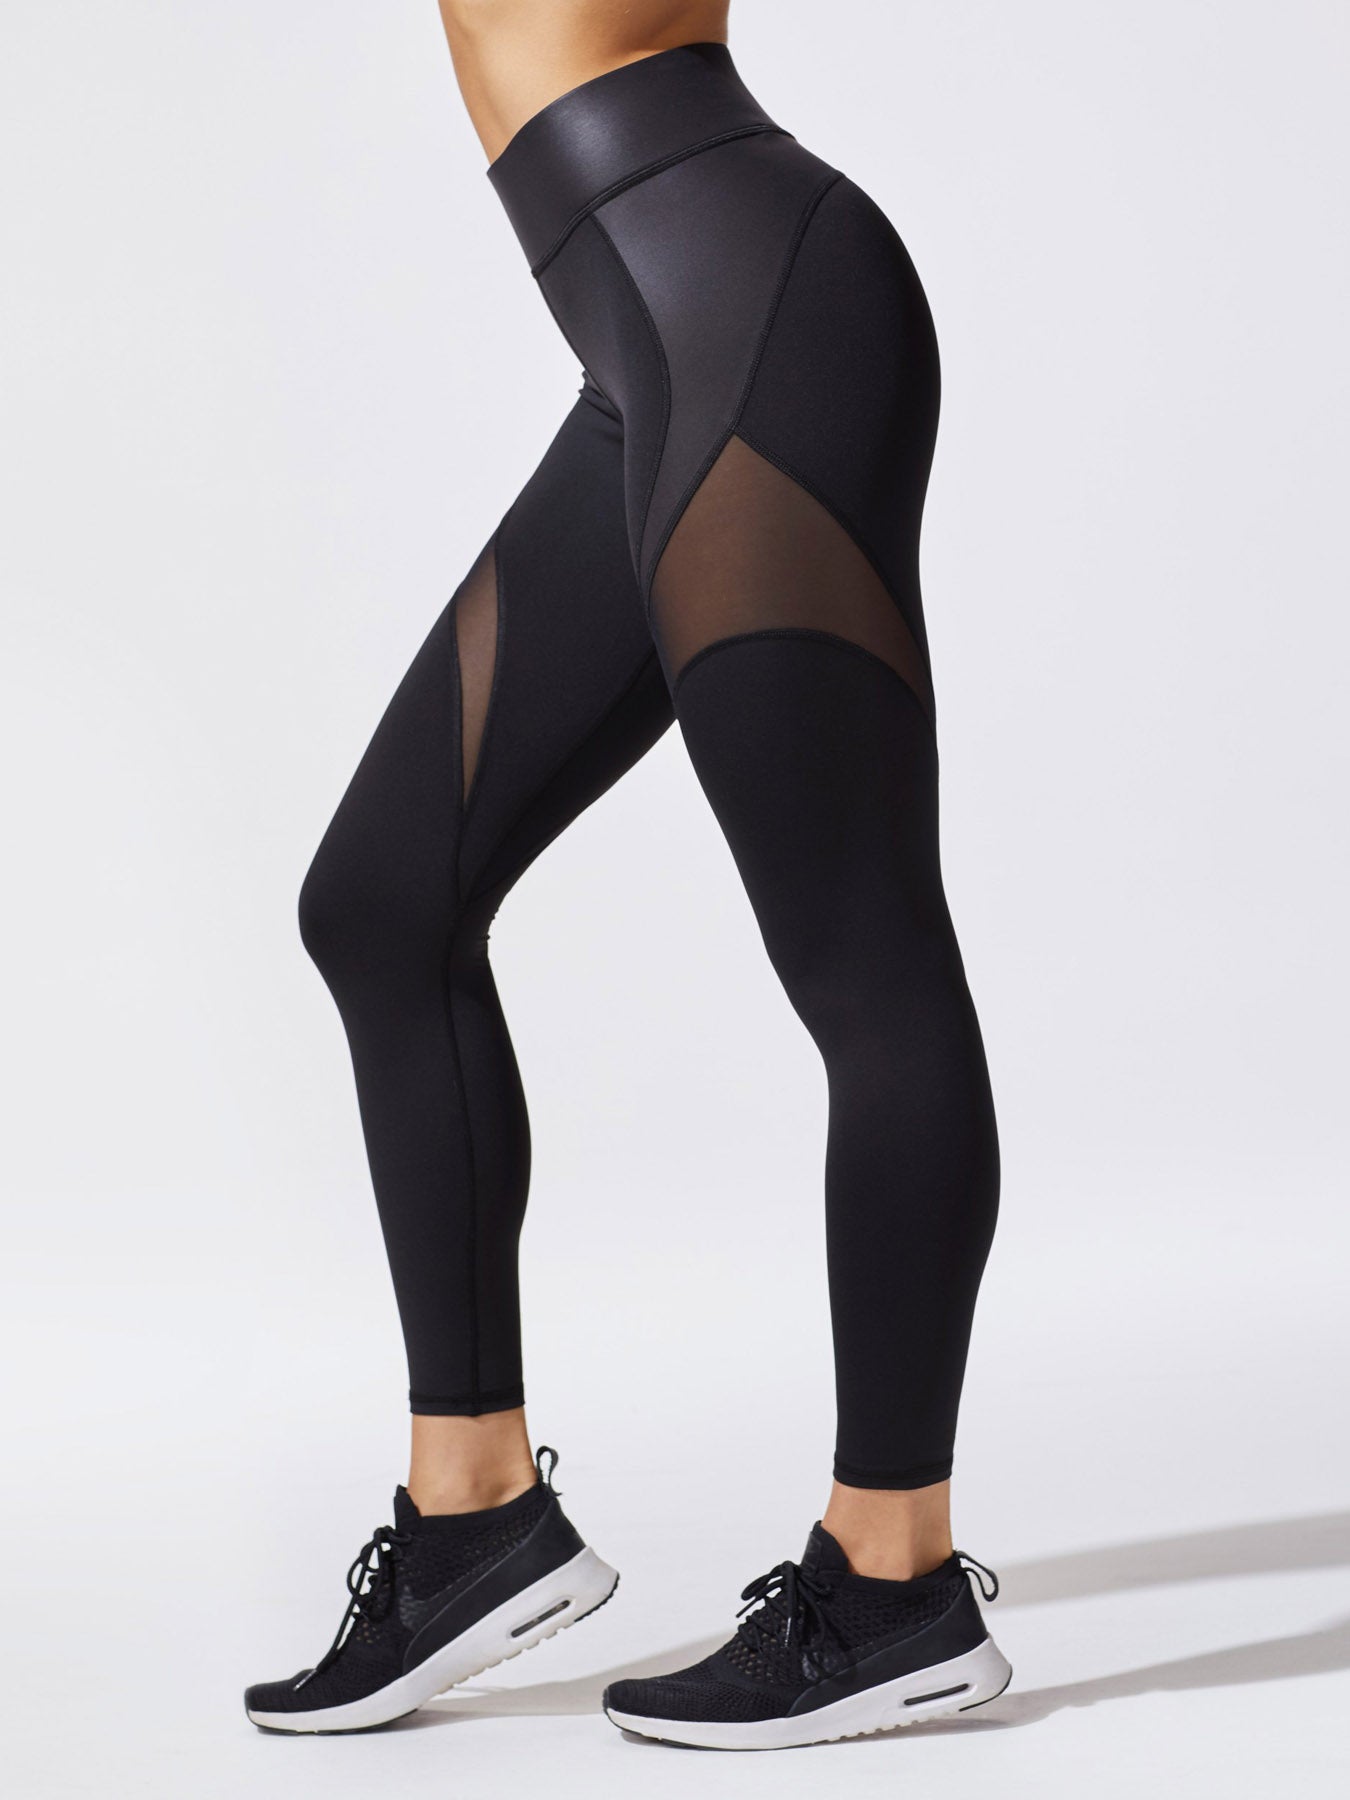 Buy Black Leggings for Women by SRISHTI Online | Ajio.com